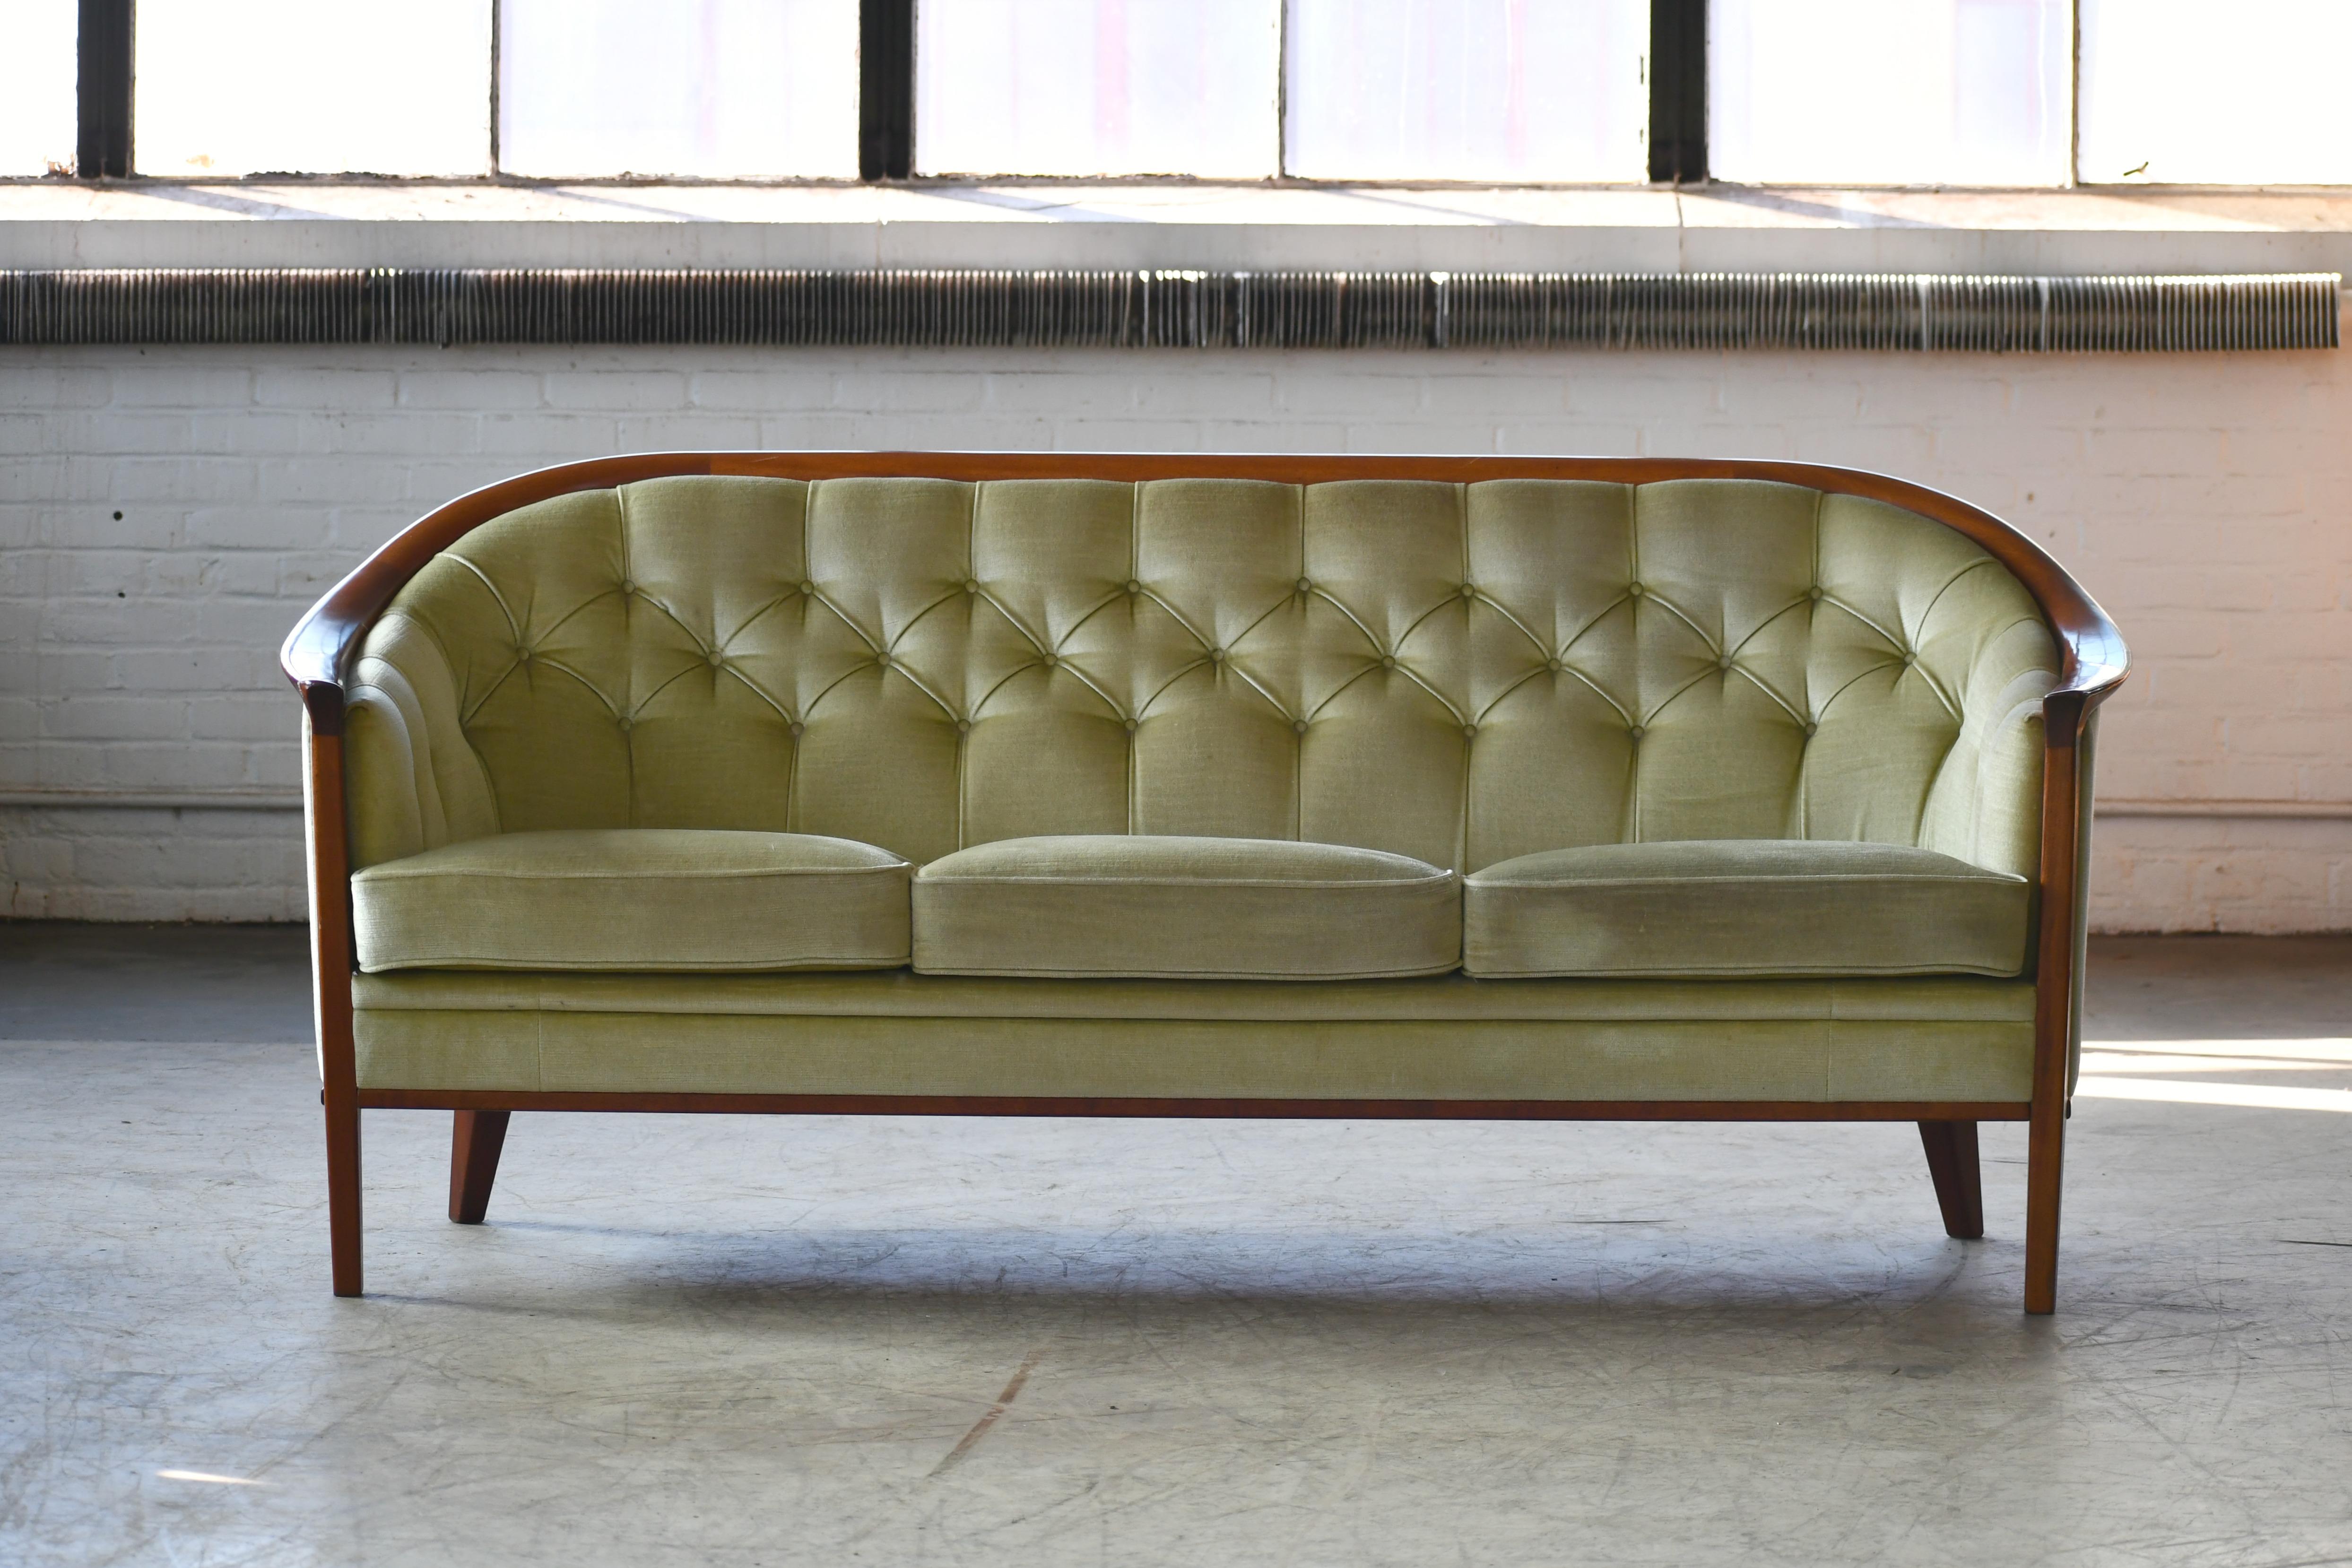 Very classy and elegant sofa model 